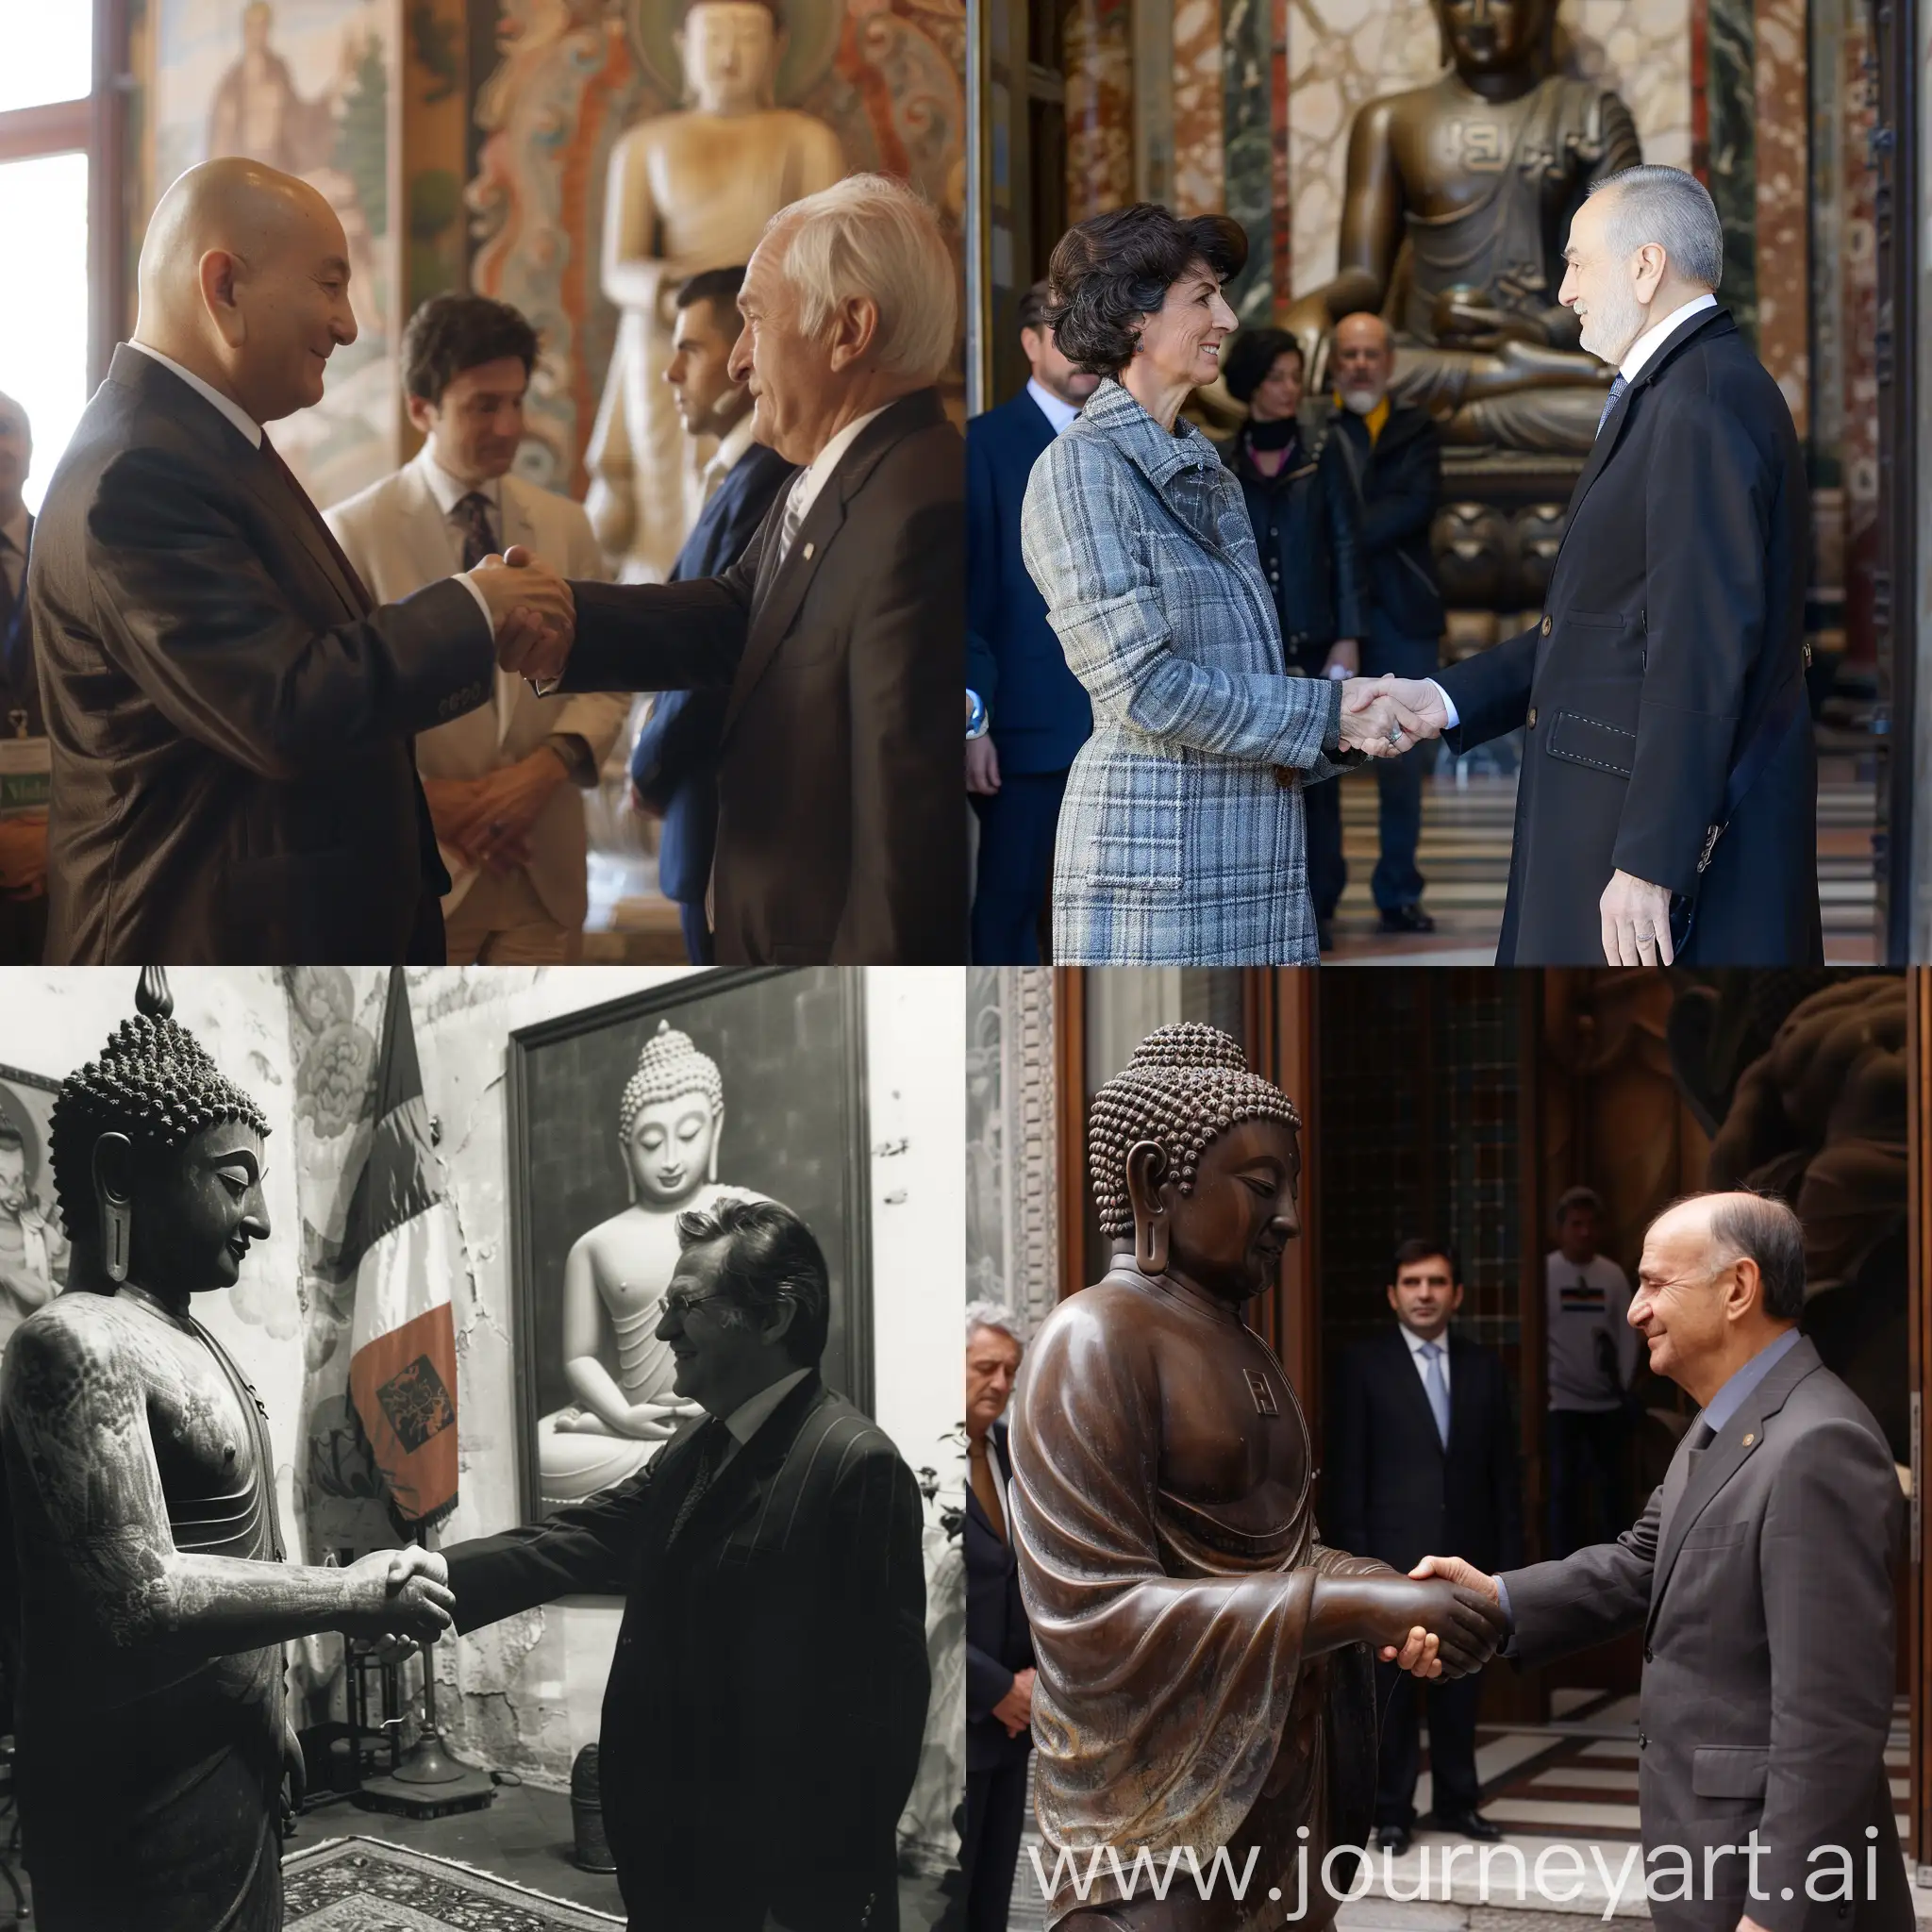 Buddha shaking hands with italian prime minister Giorgia Meloni